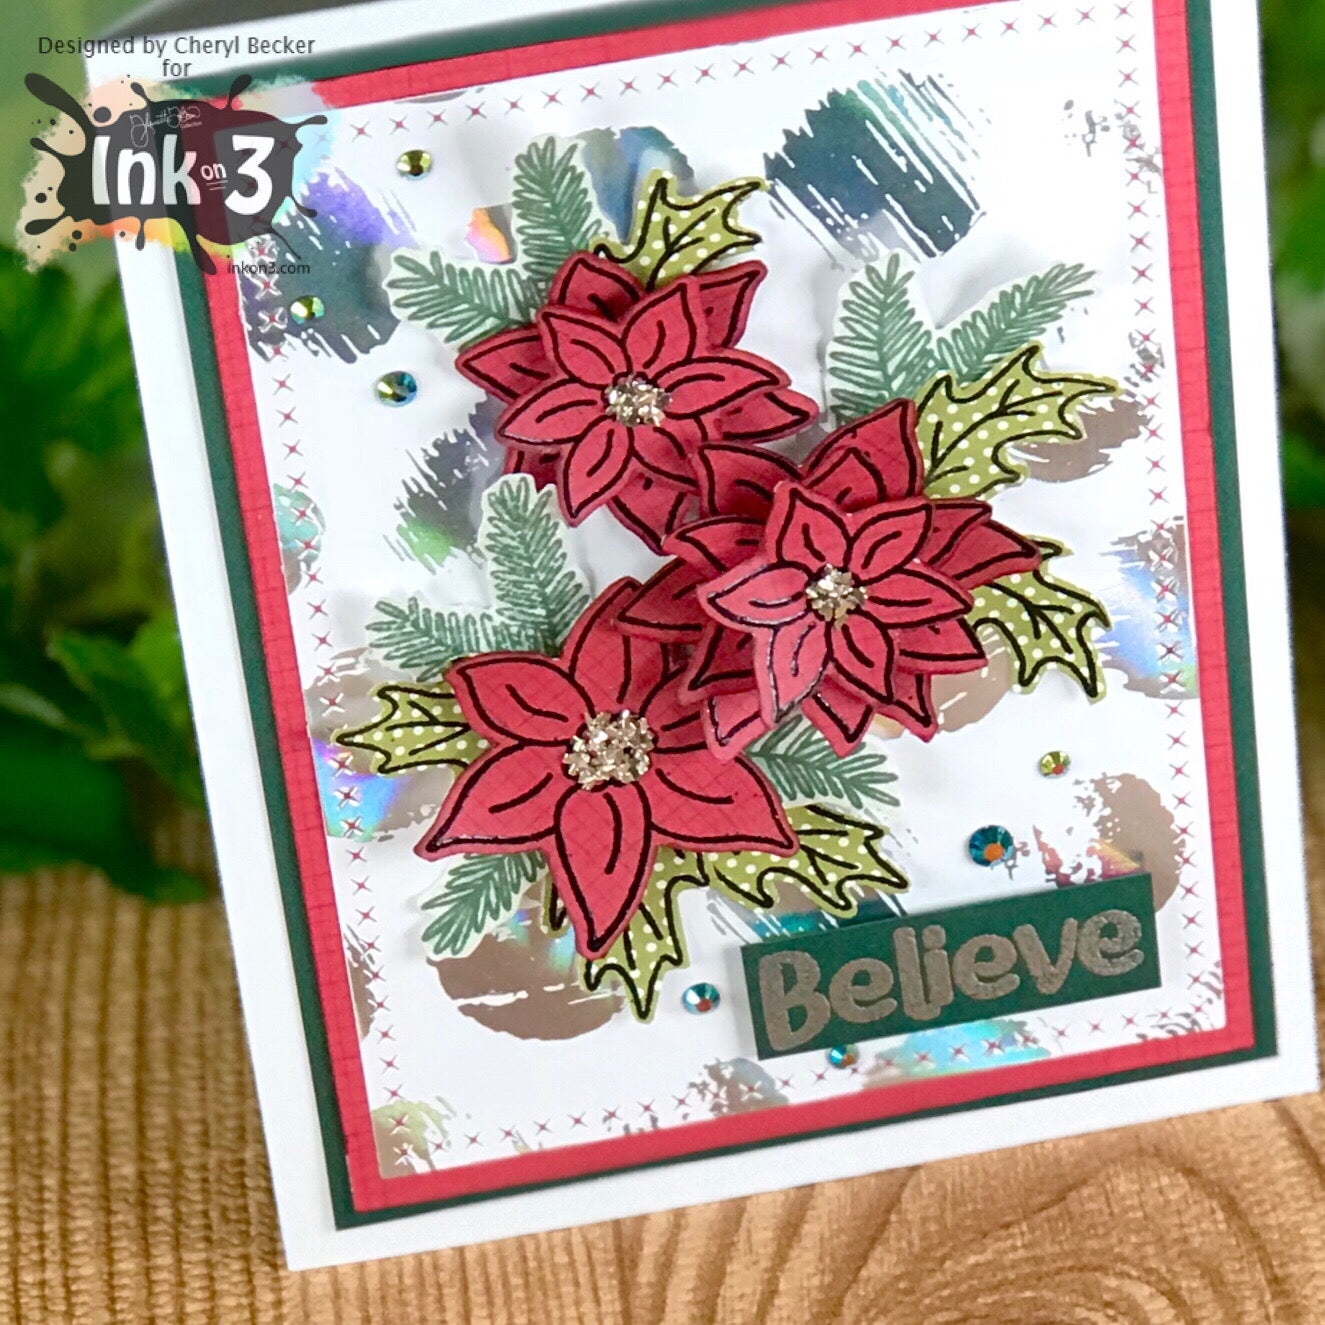 Card Example Blessings / Poinsettia by Cheryl ~ inkon3.com